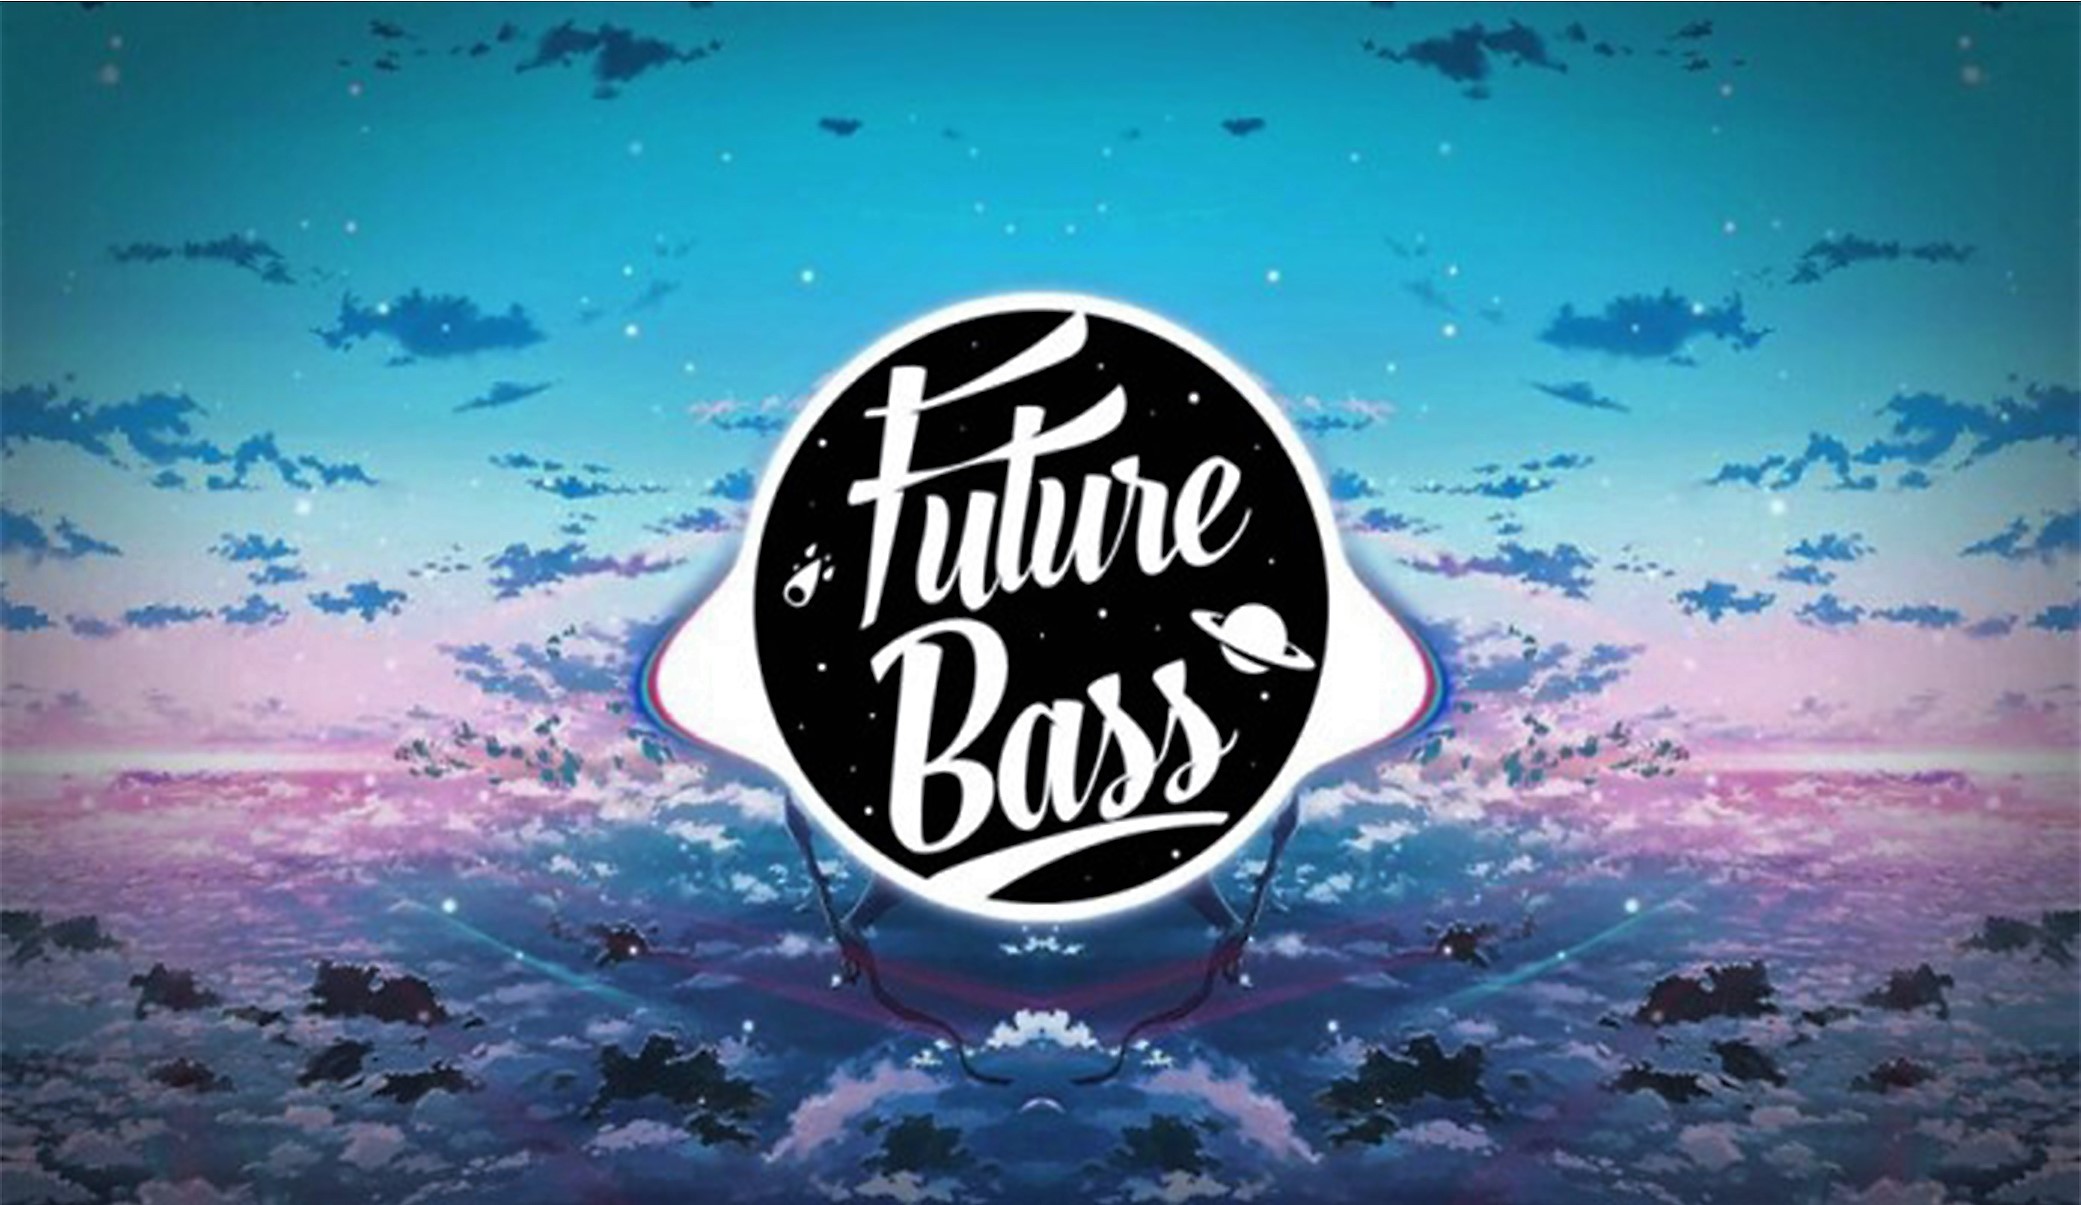 Future bass Drop